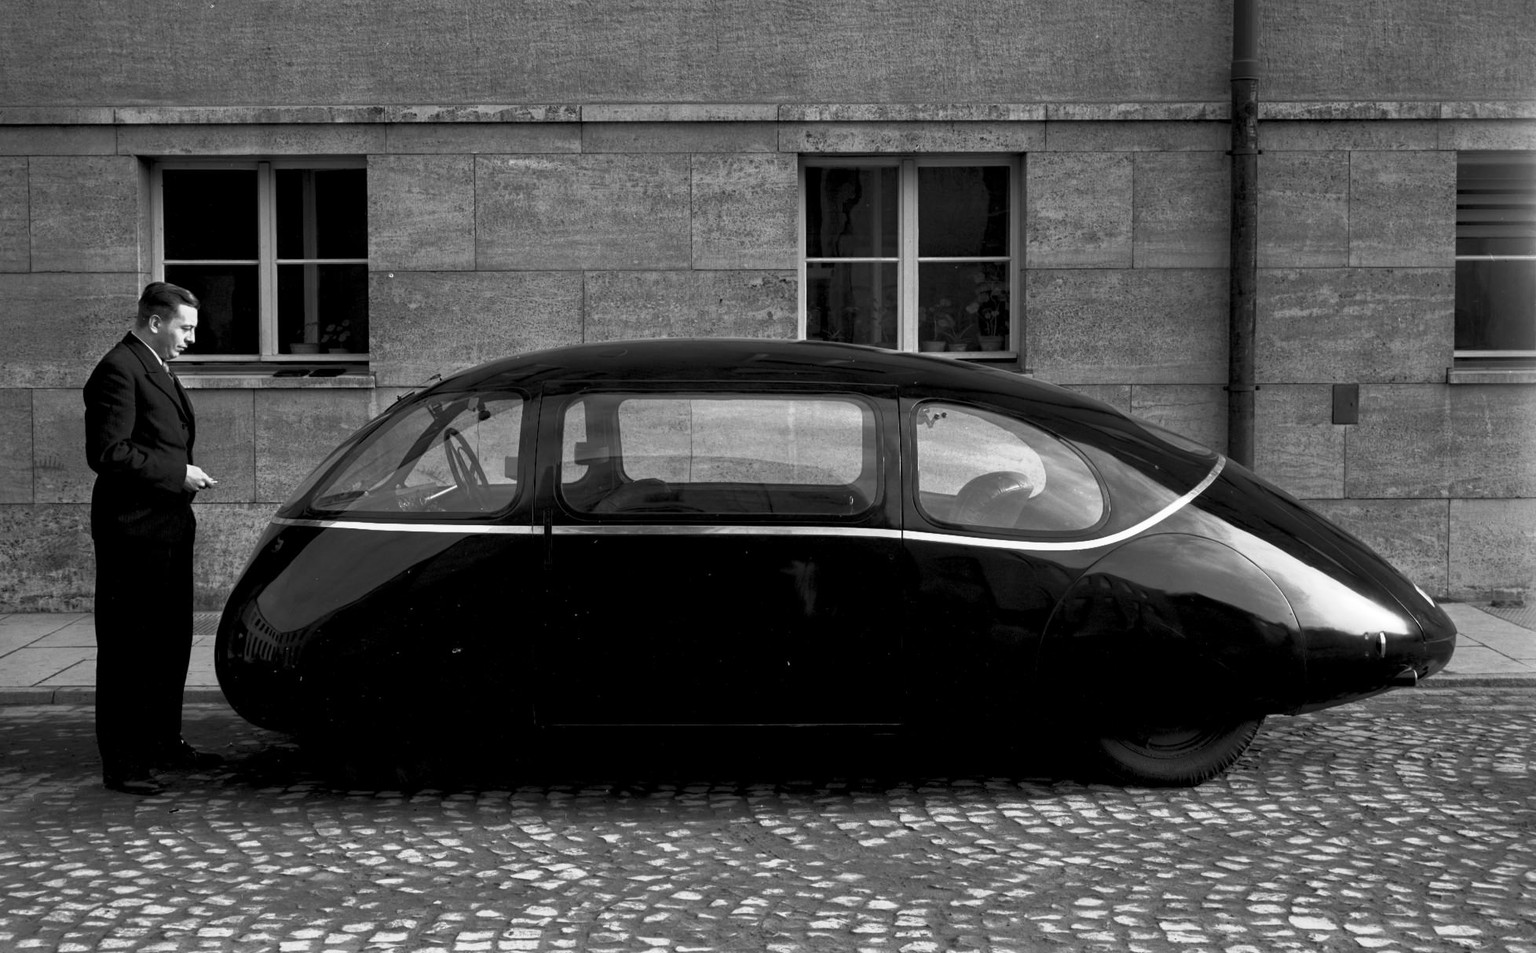 The Schlörwagen, an experimental vehicle, in Germany in 1939.
https://imgur.com/gallery/z7cNXb9